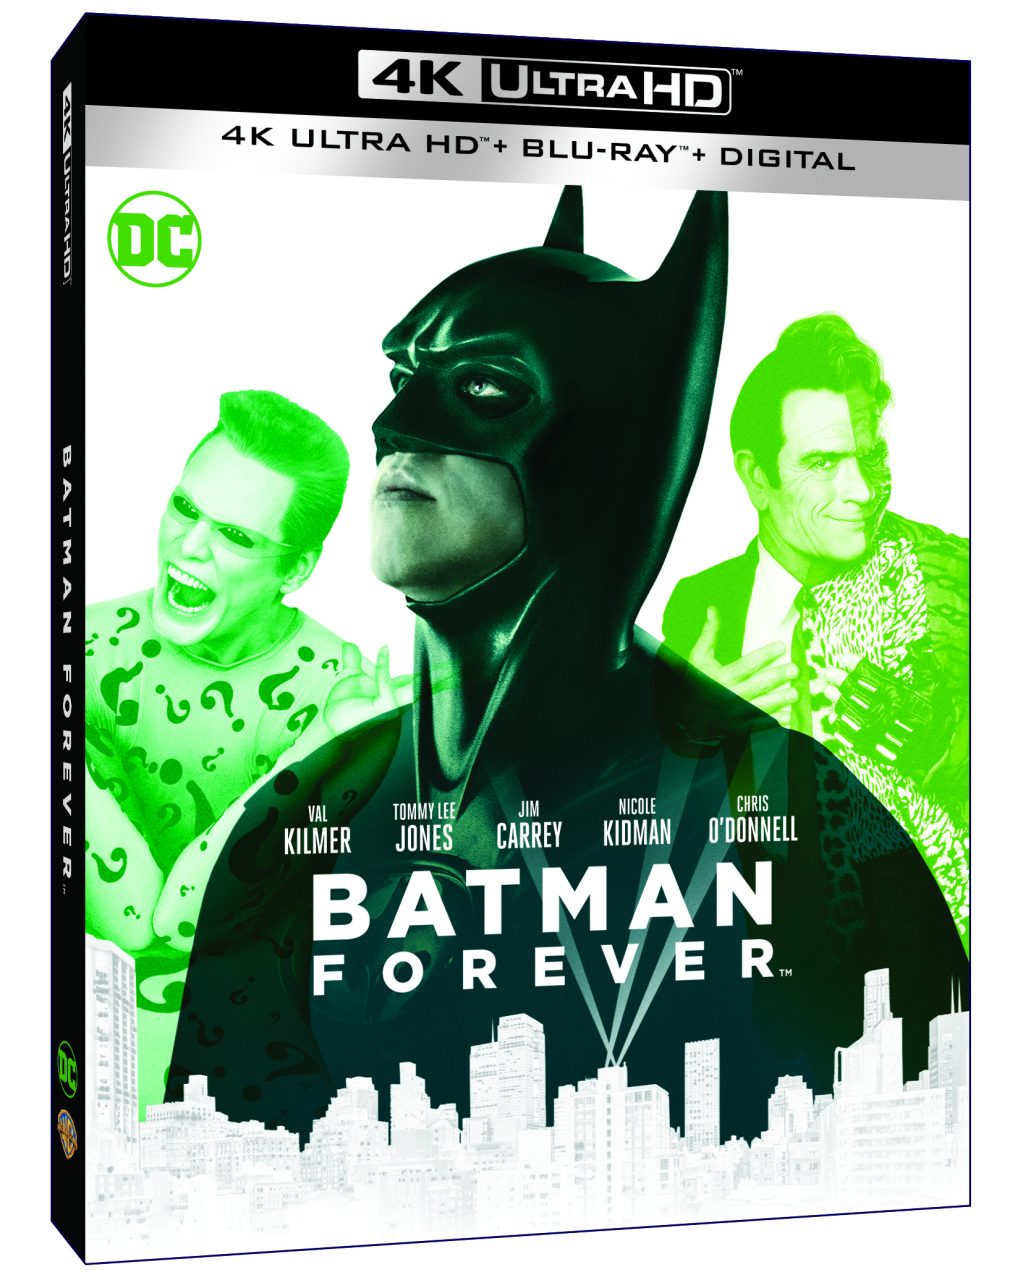 Batman Forever 4K Ultra HD cover (Warner Bros. Home Entertainment)